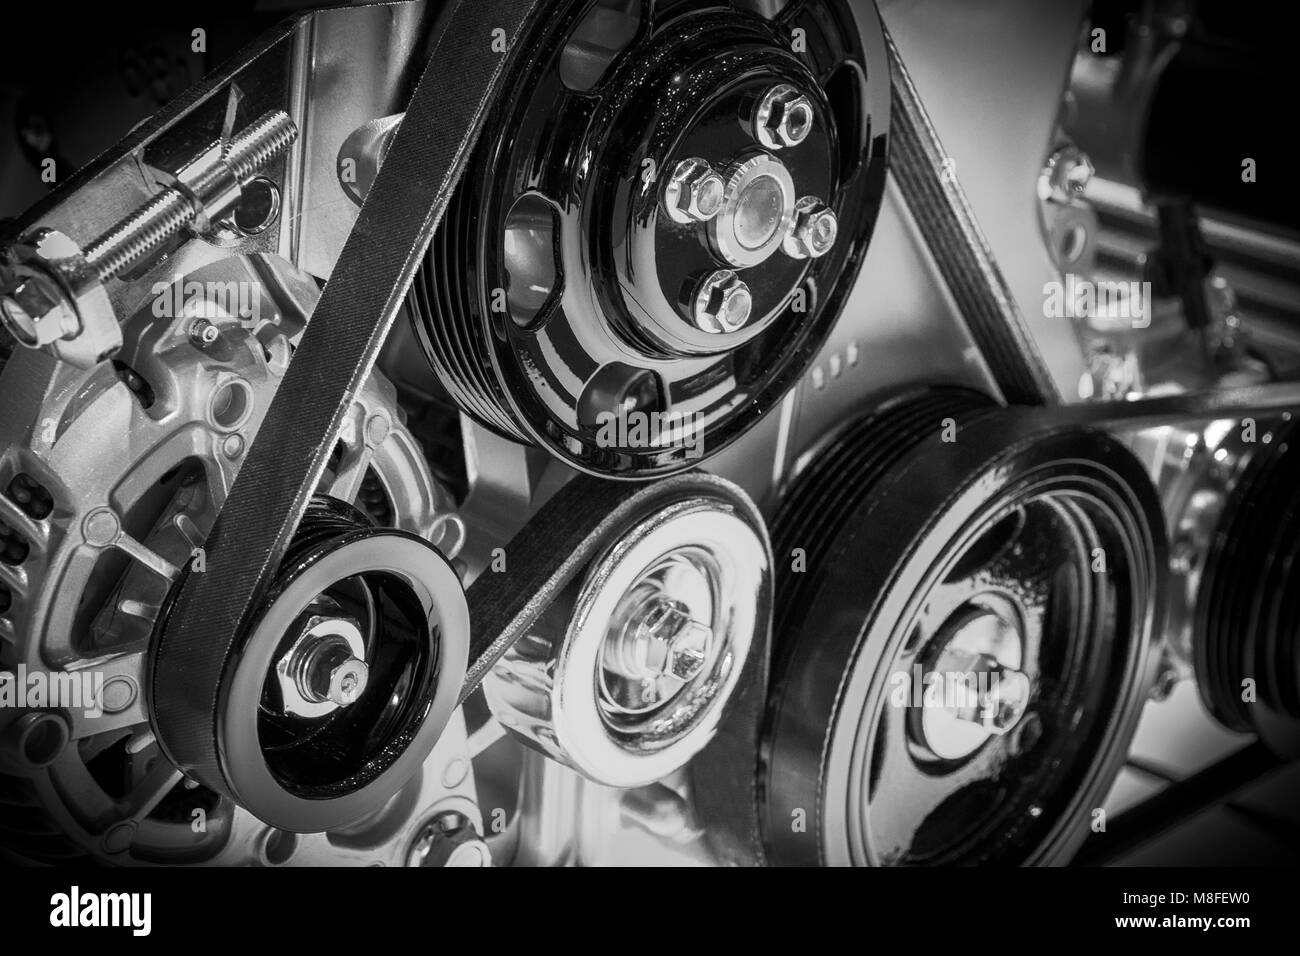 Crankshaft engine Black and White Stock Photos & Images - Alamy